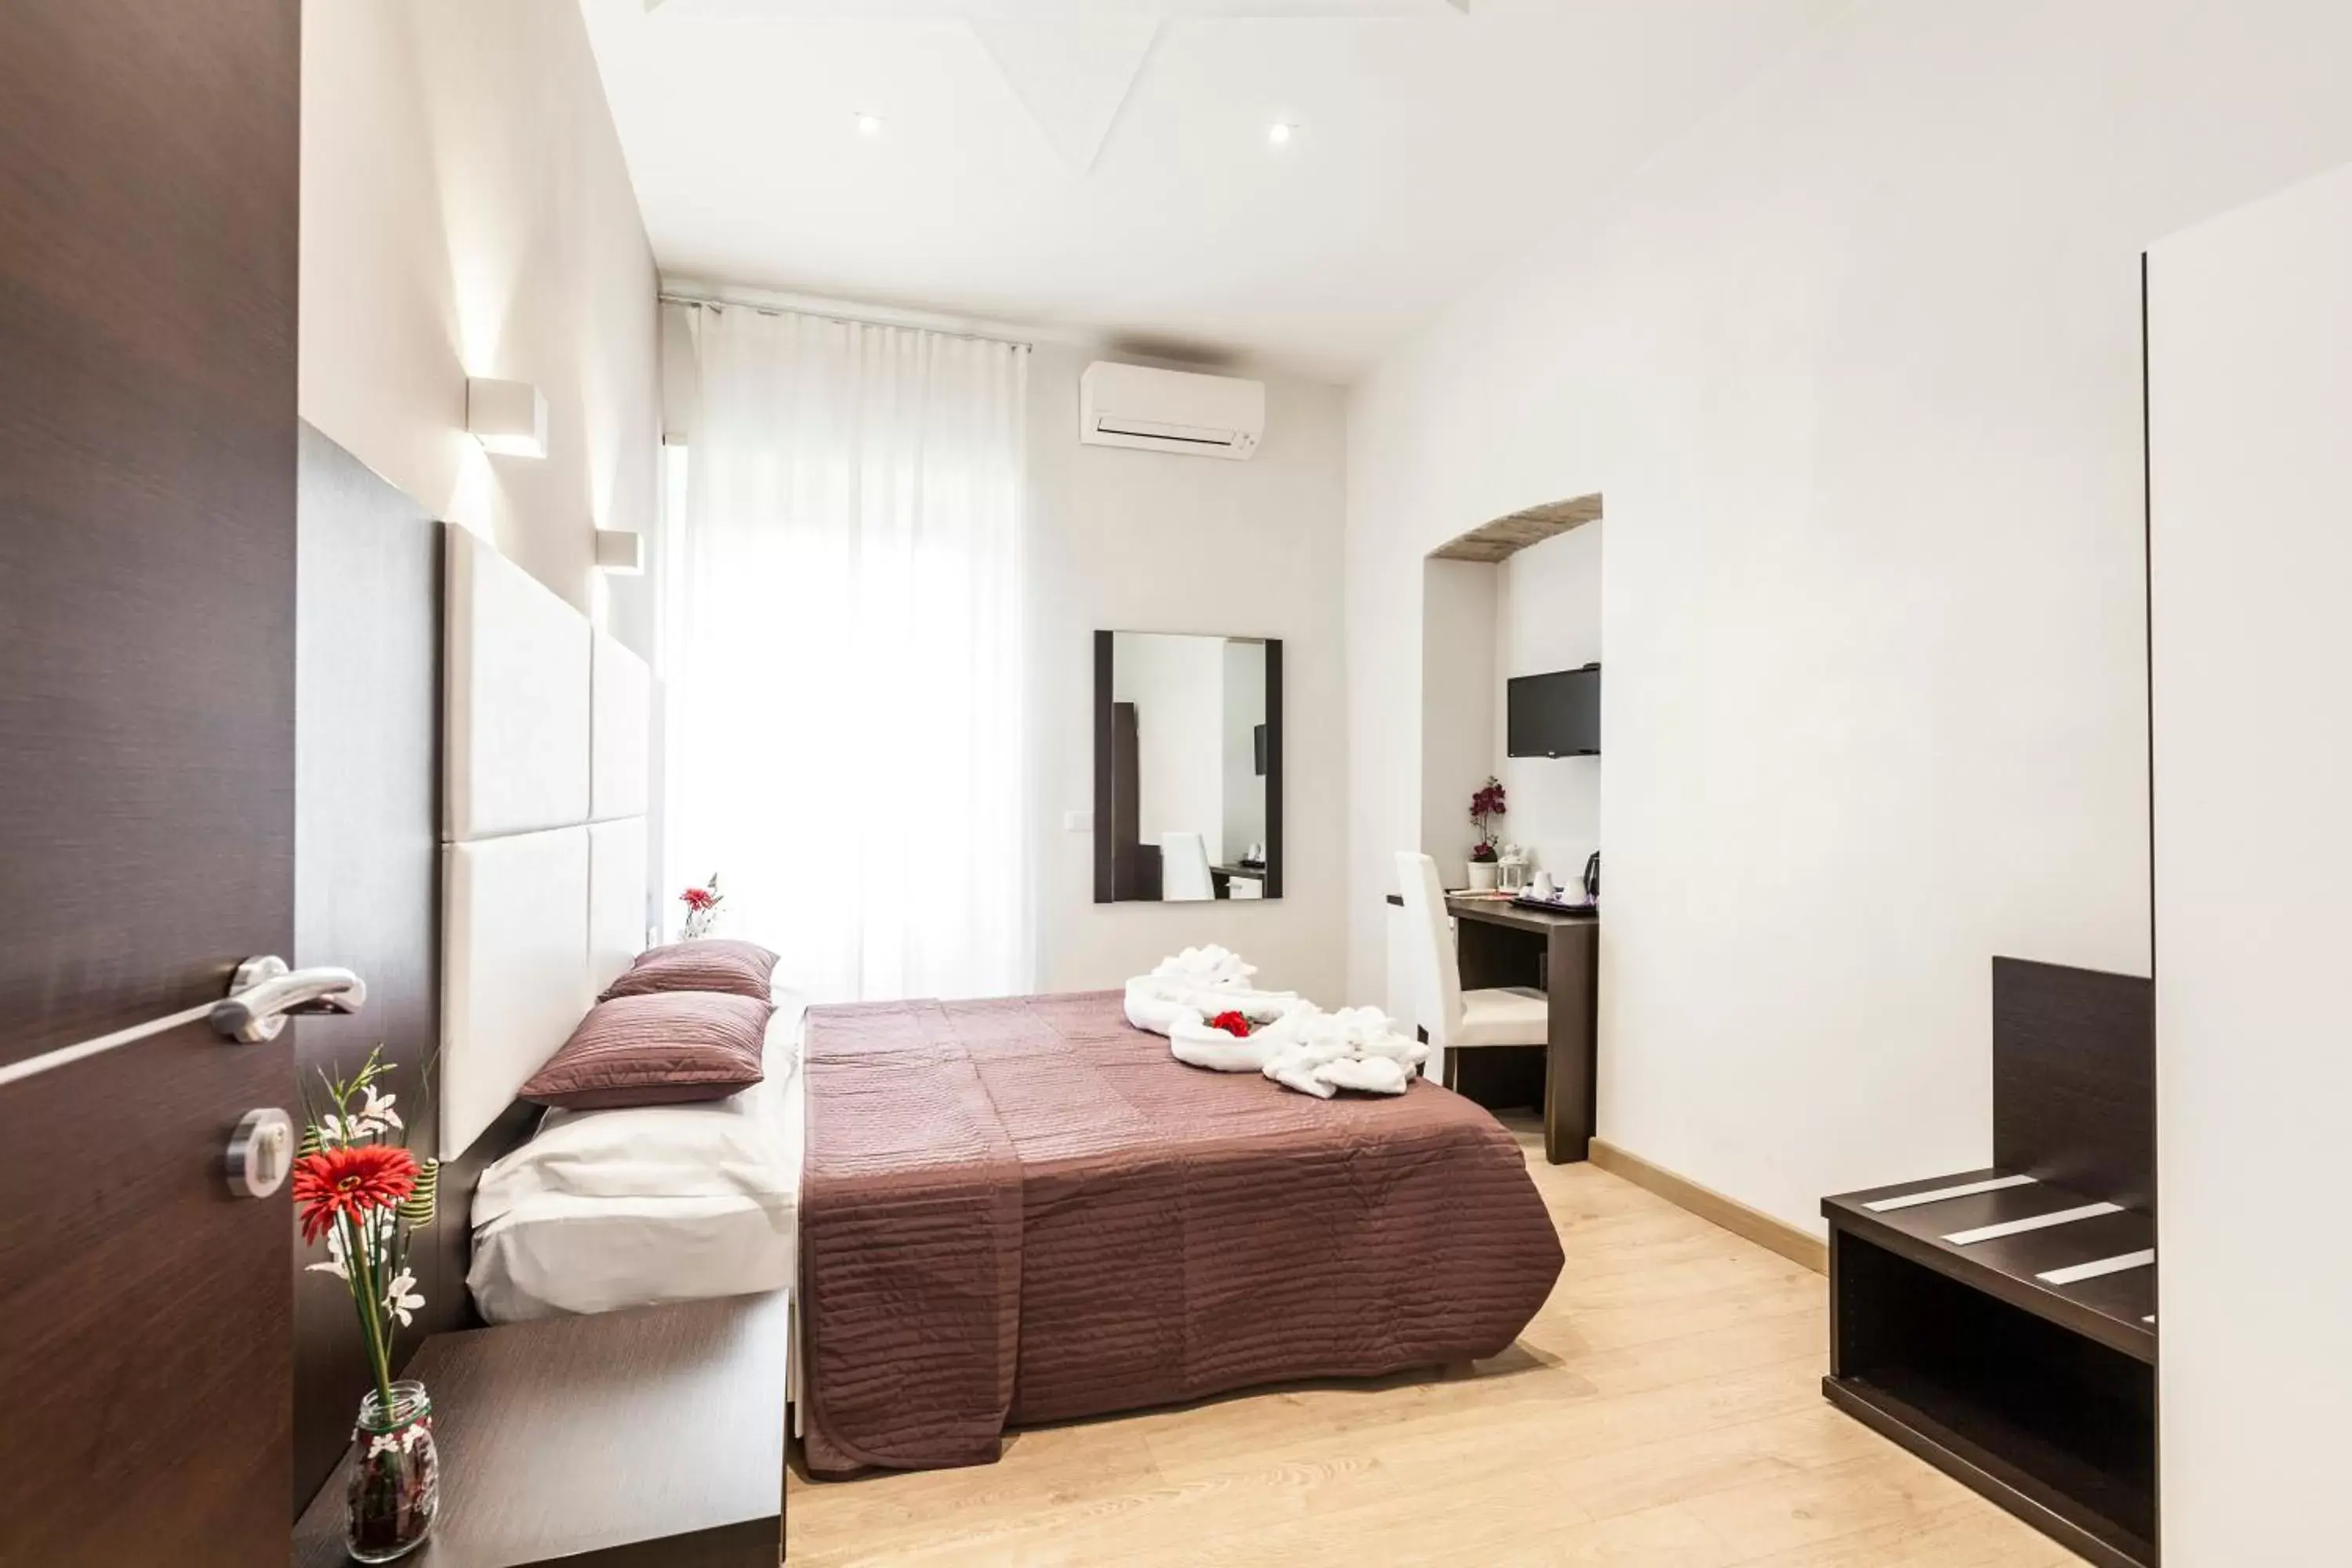 Bedroom, Room Photo in Stardust Rome